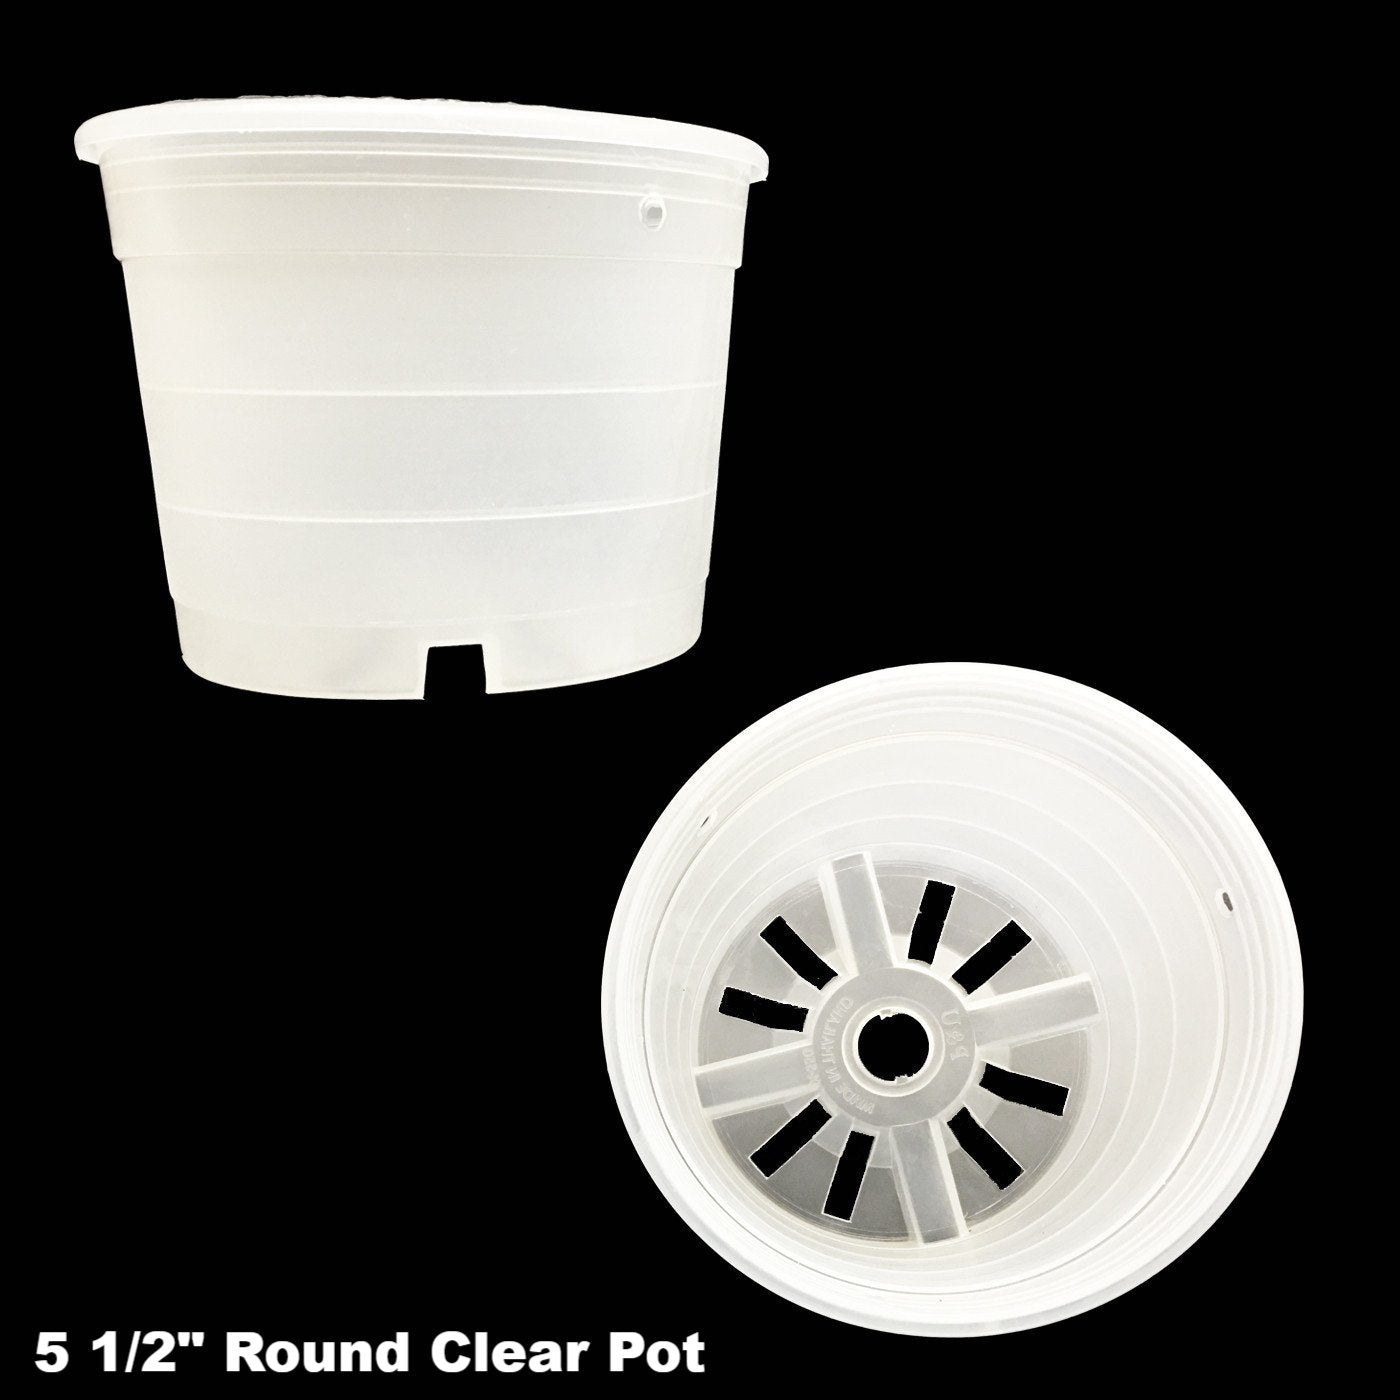 5 Gallon Round Plastic Bucket Dolly - Beige